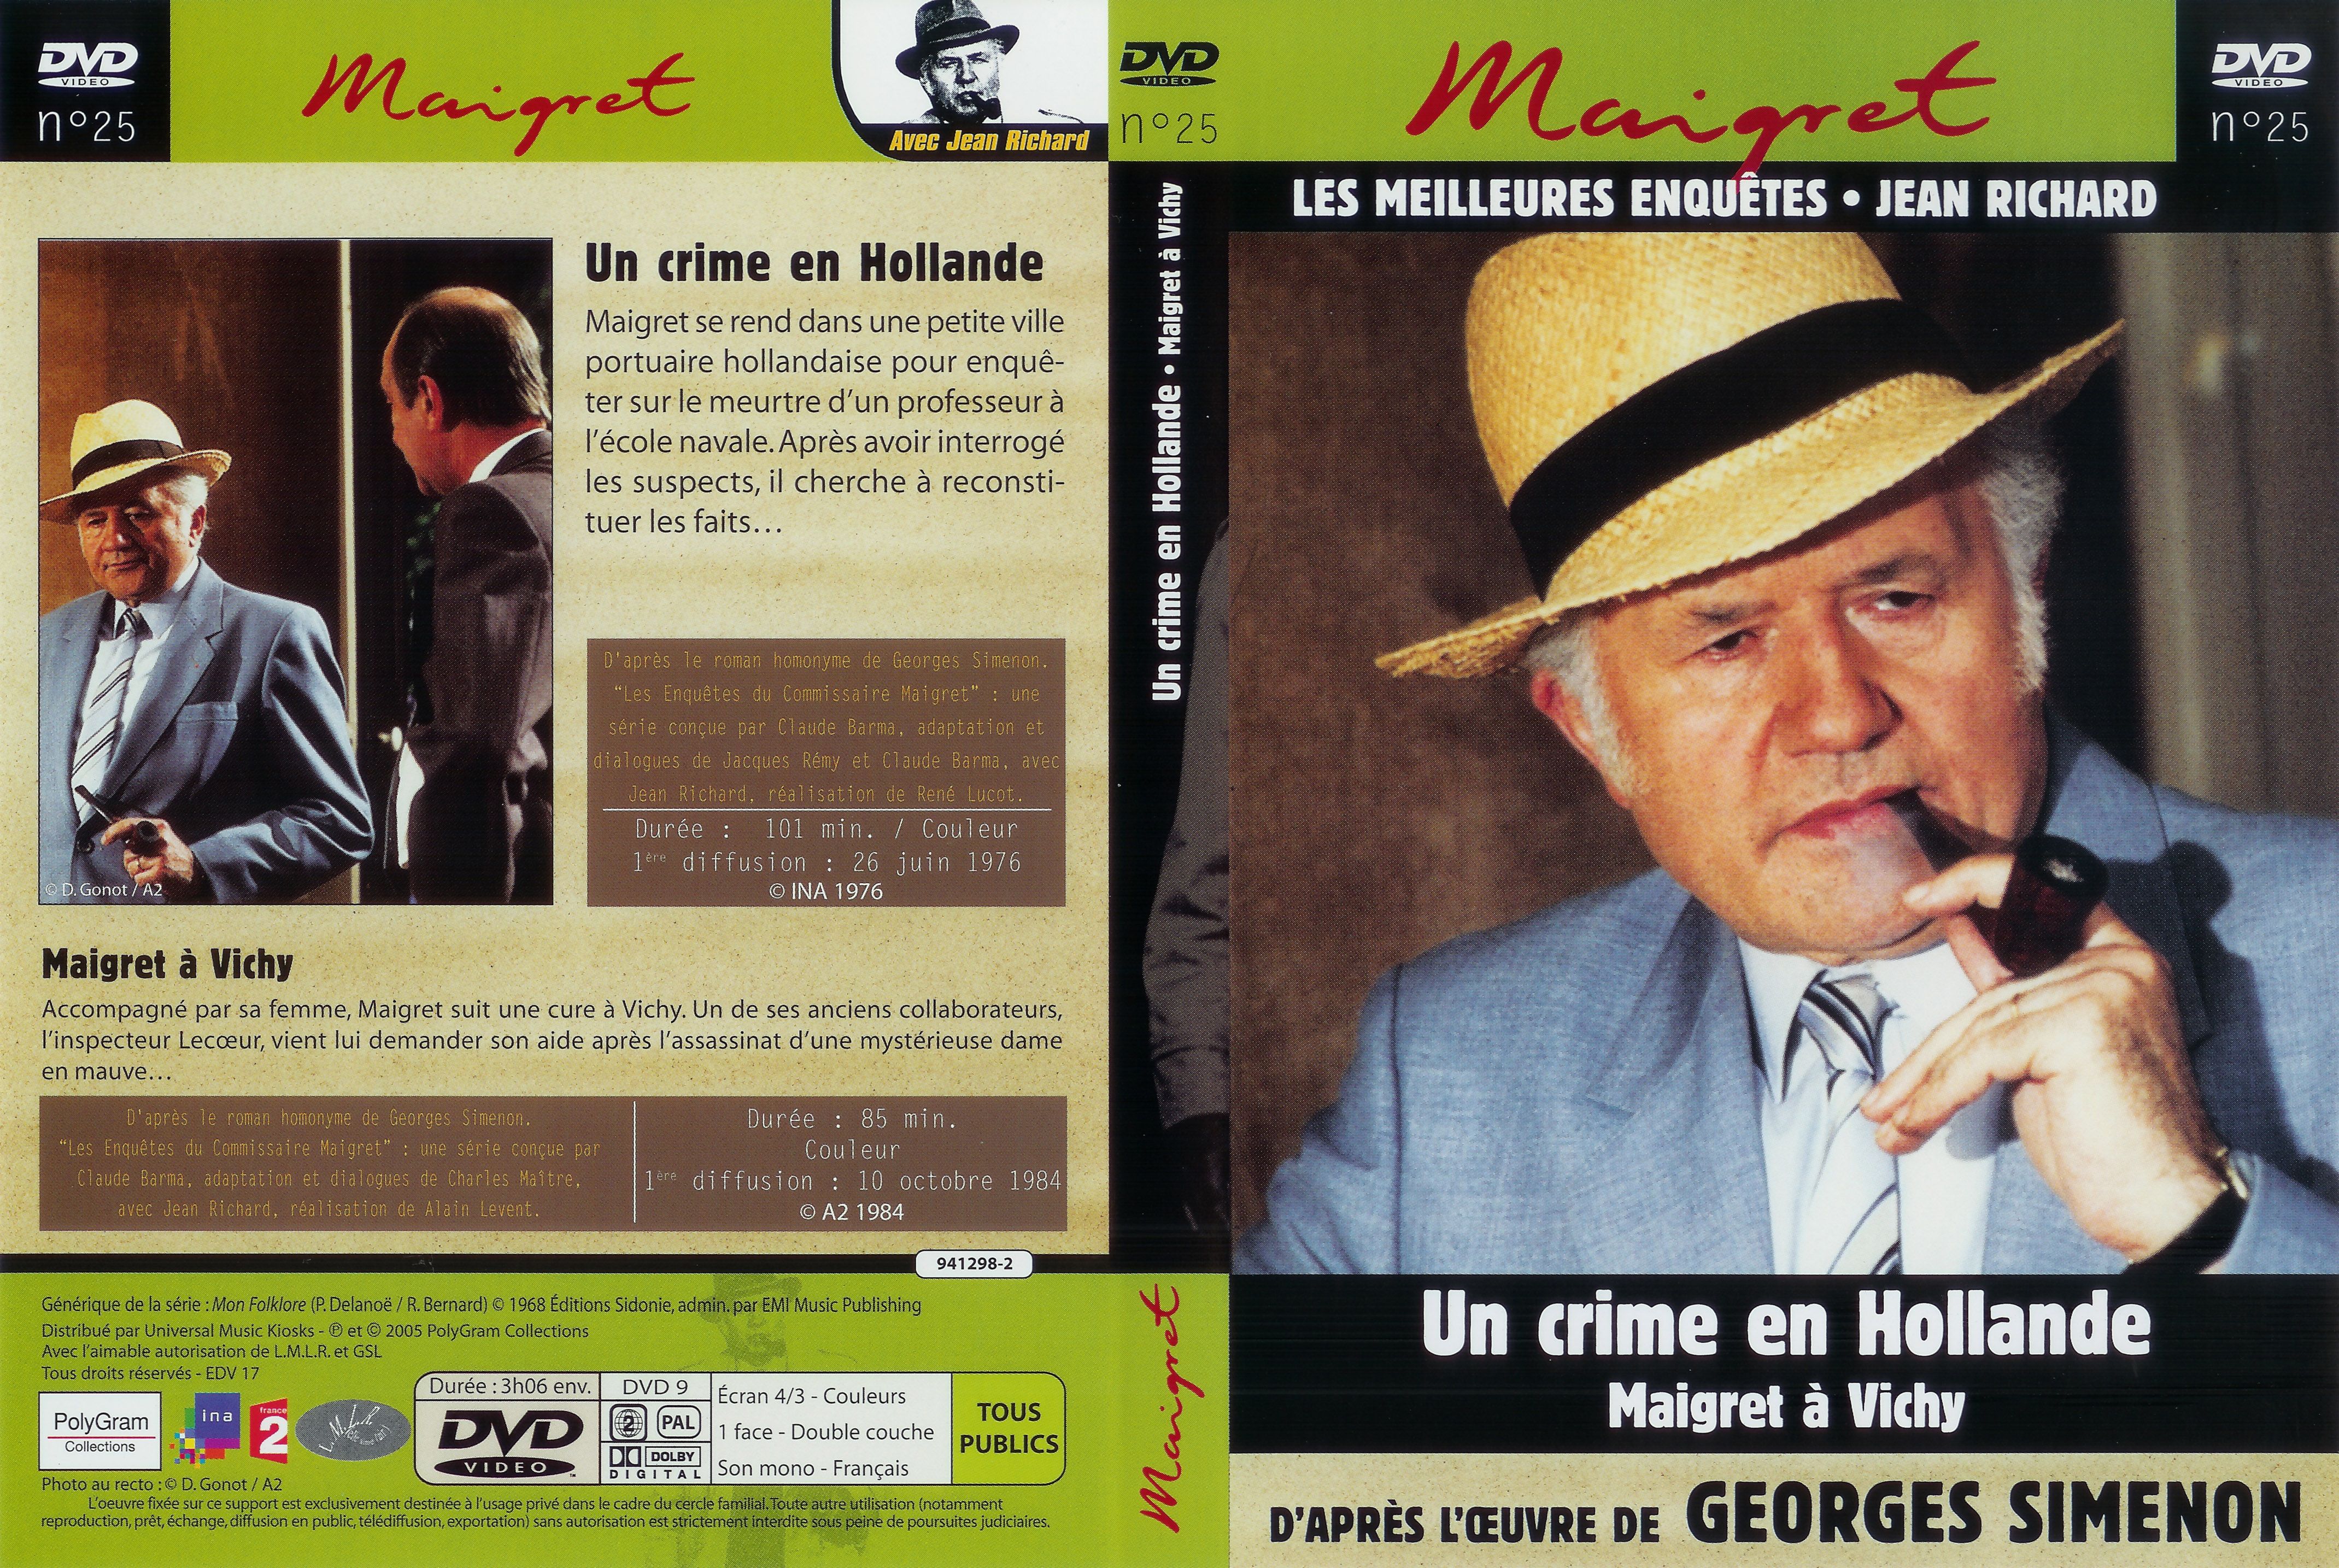 Jaquette DVD Maigret (Jean Richard) vol 25